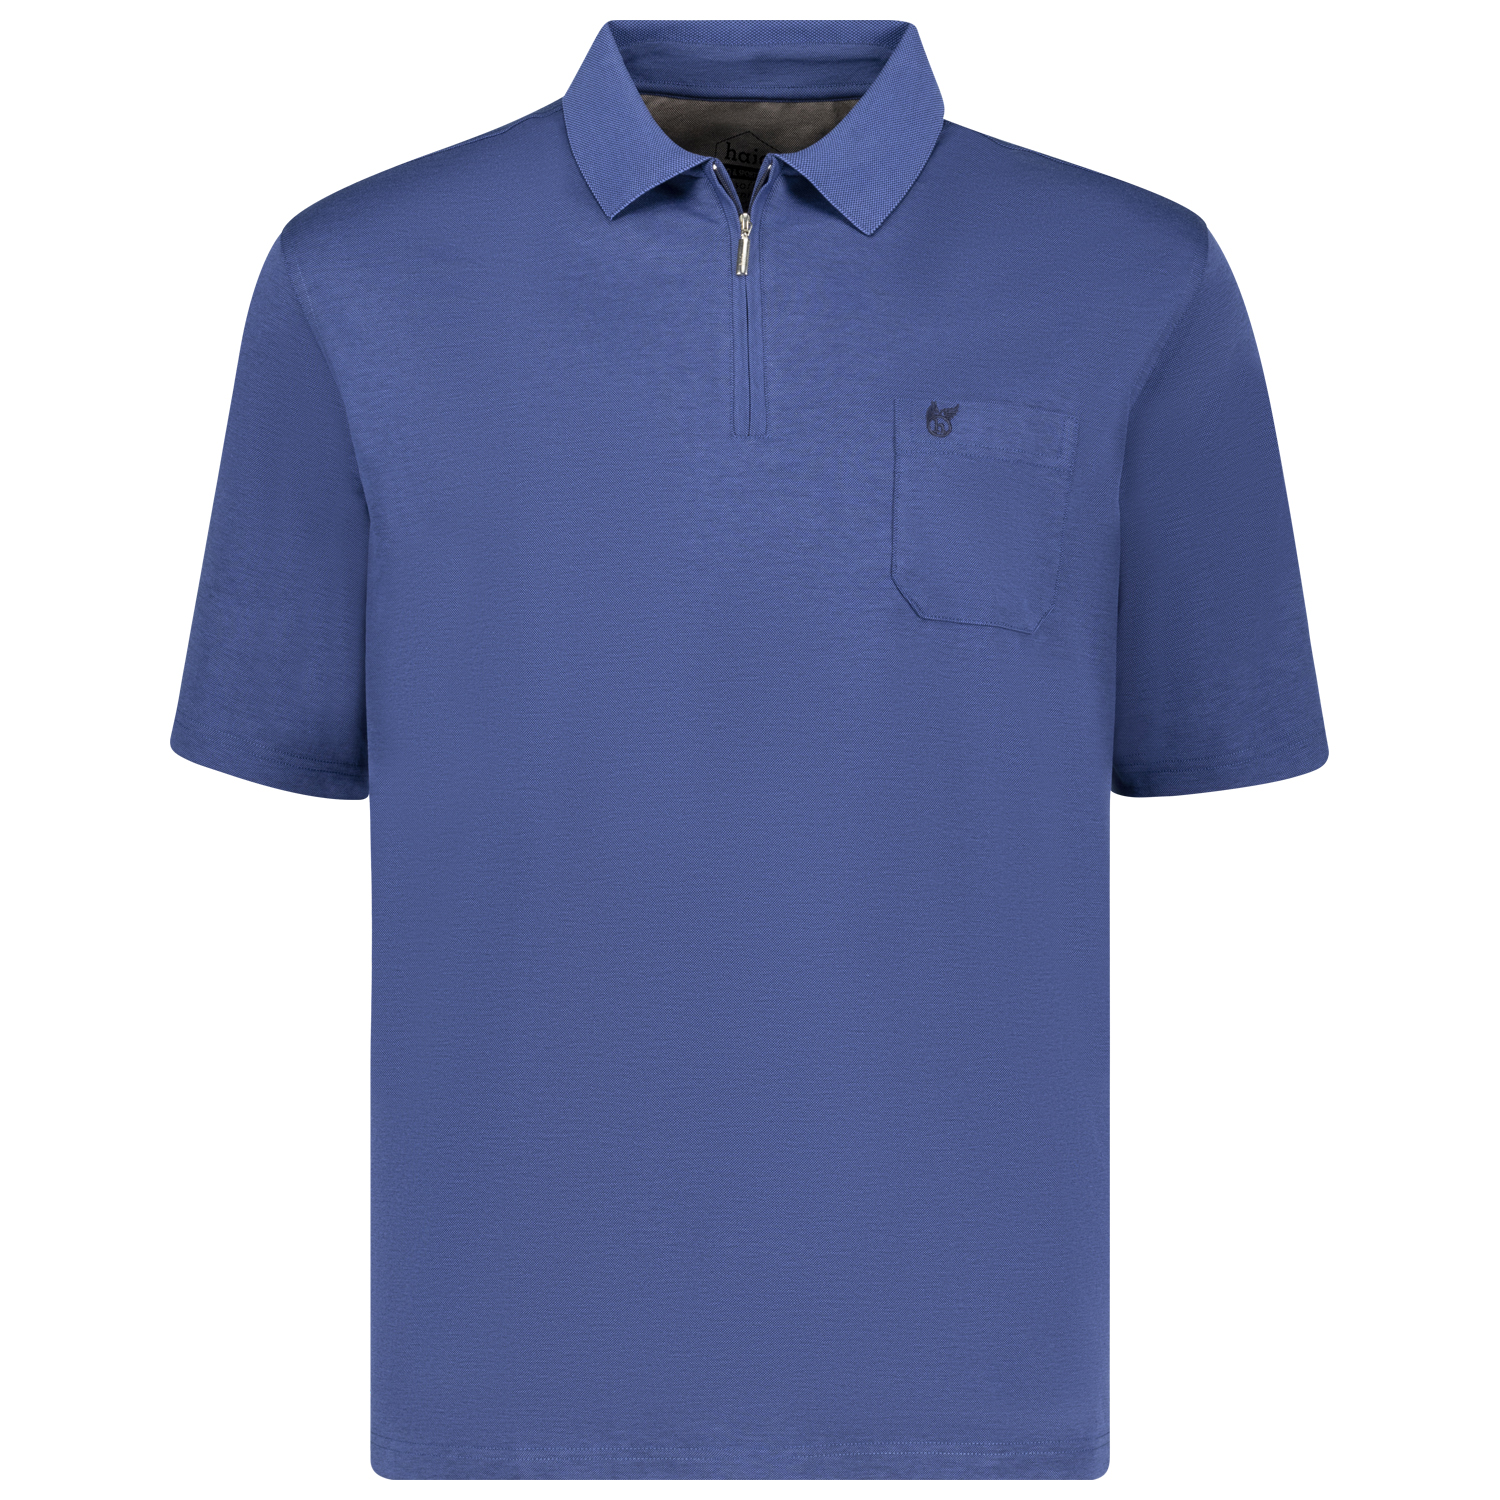 Polo-shirt "Softknit" by hajo en grandes tailles jusqu'au 6XL- coloris bleu chiné